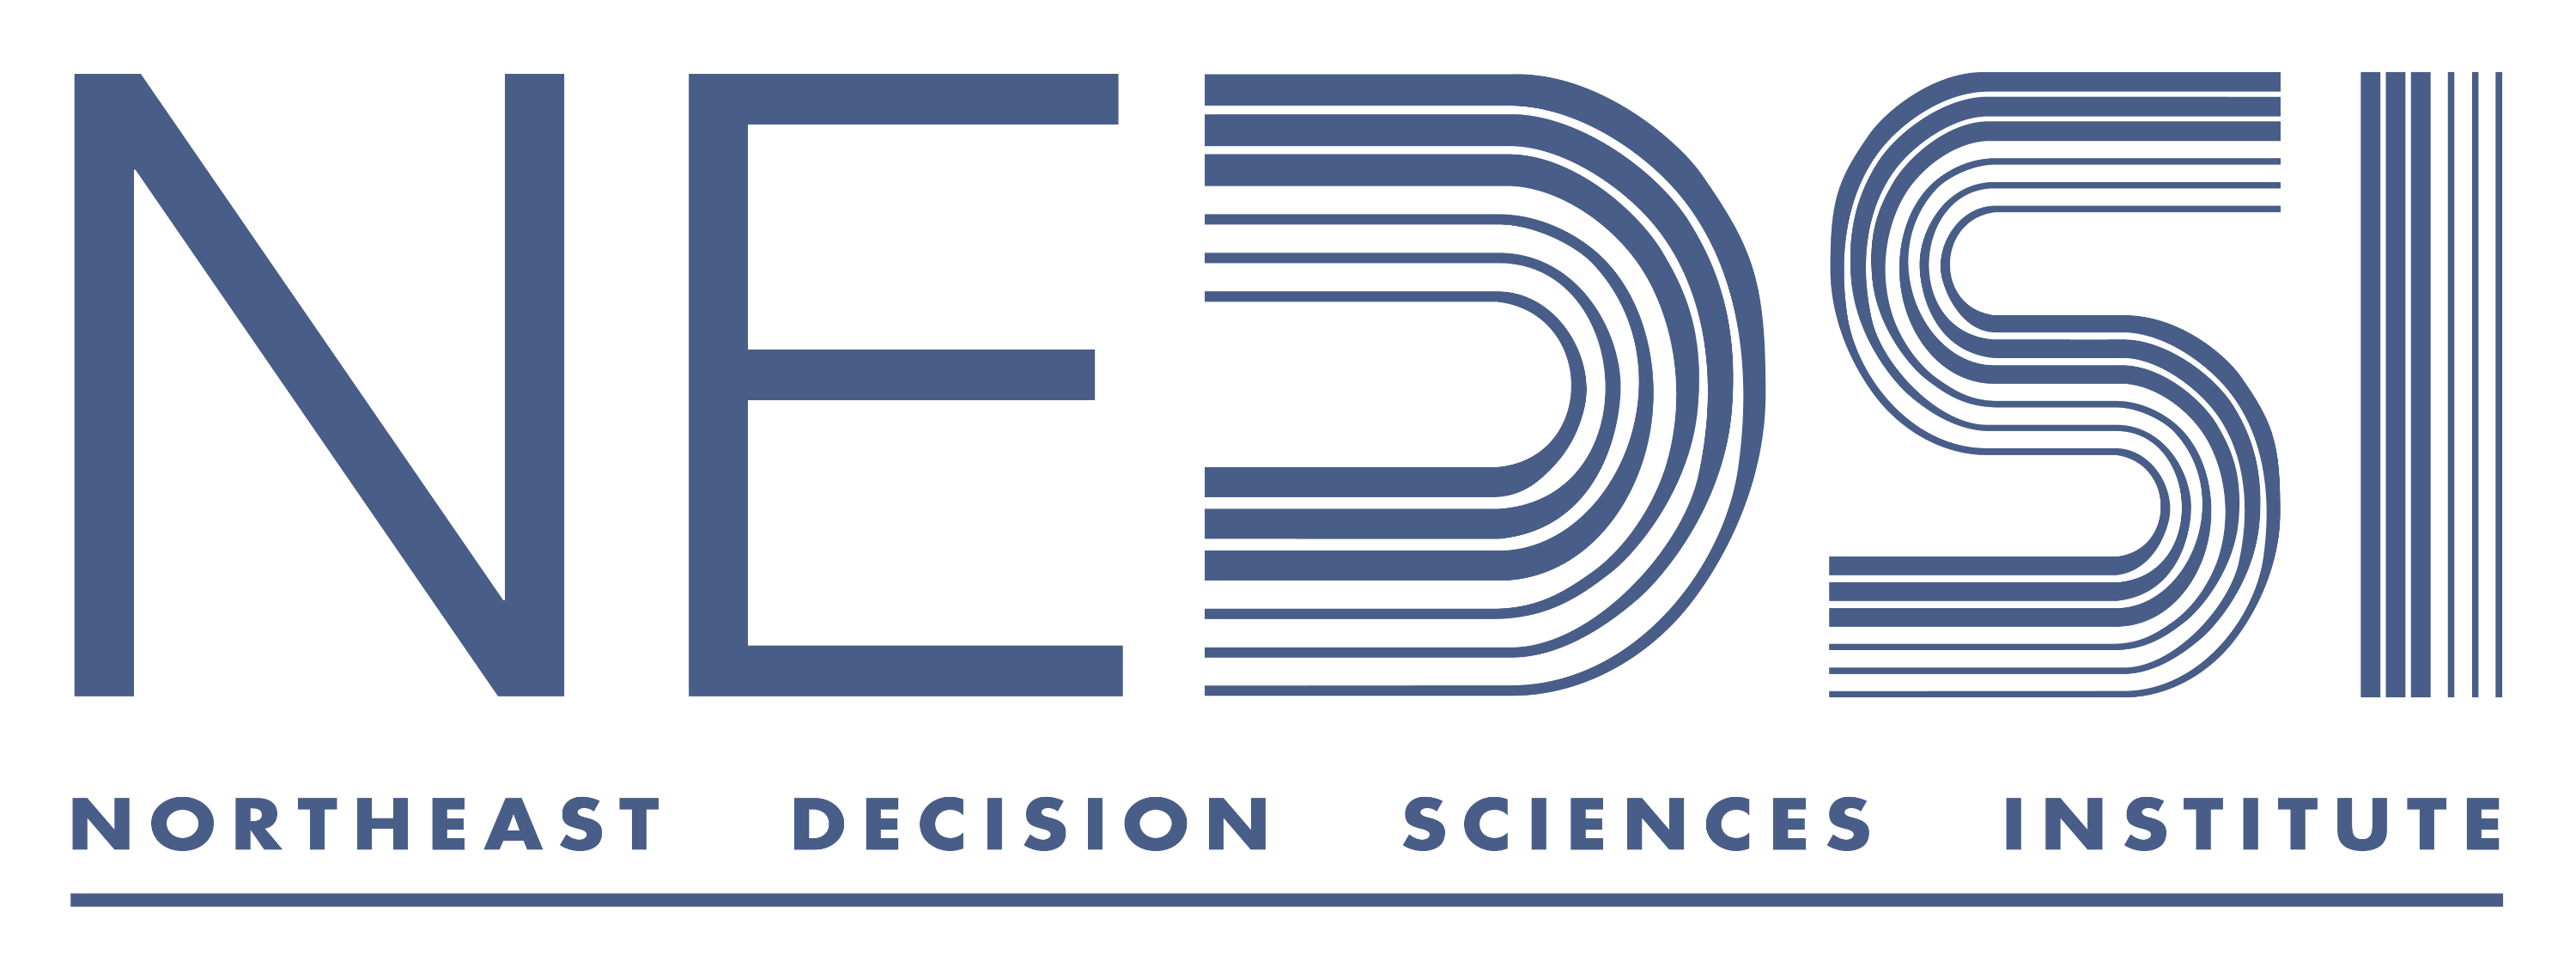 2022 Northeast Decision Sciences Institute Annual Conference Decision